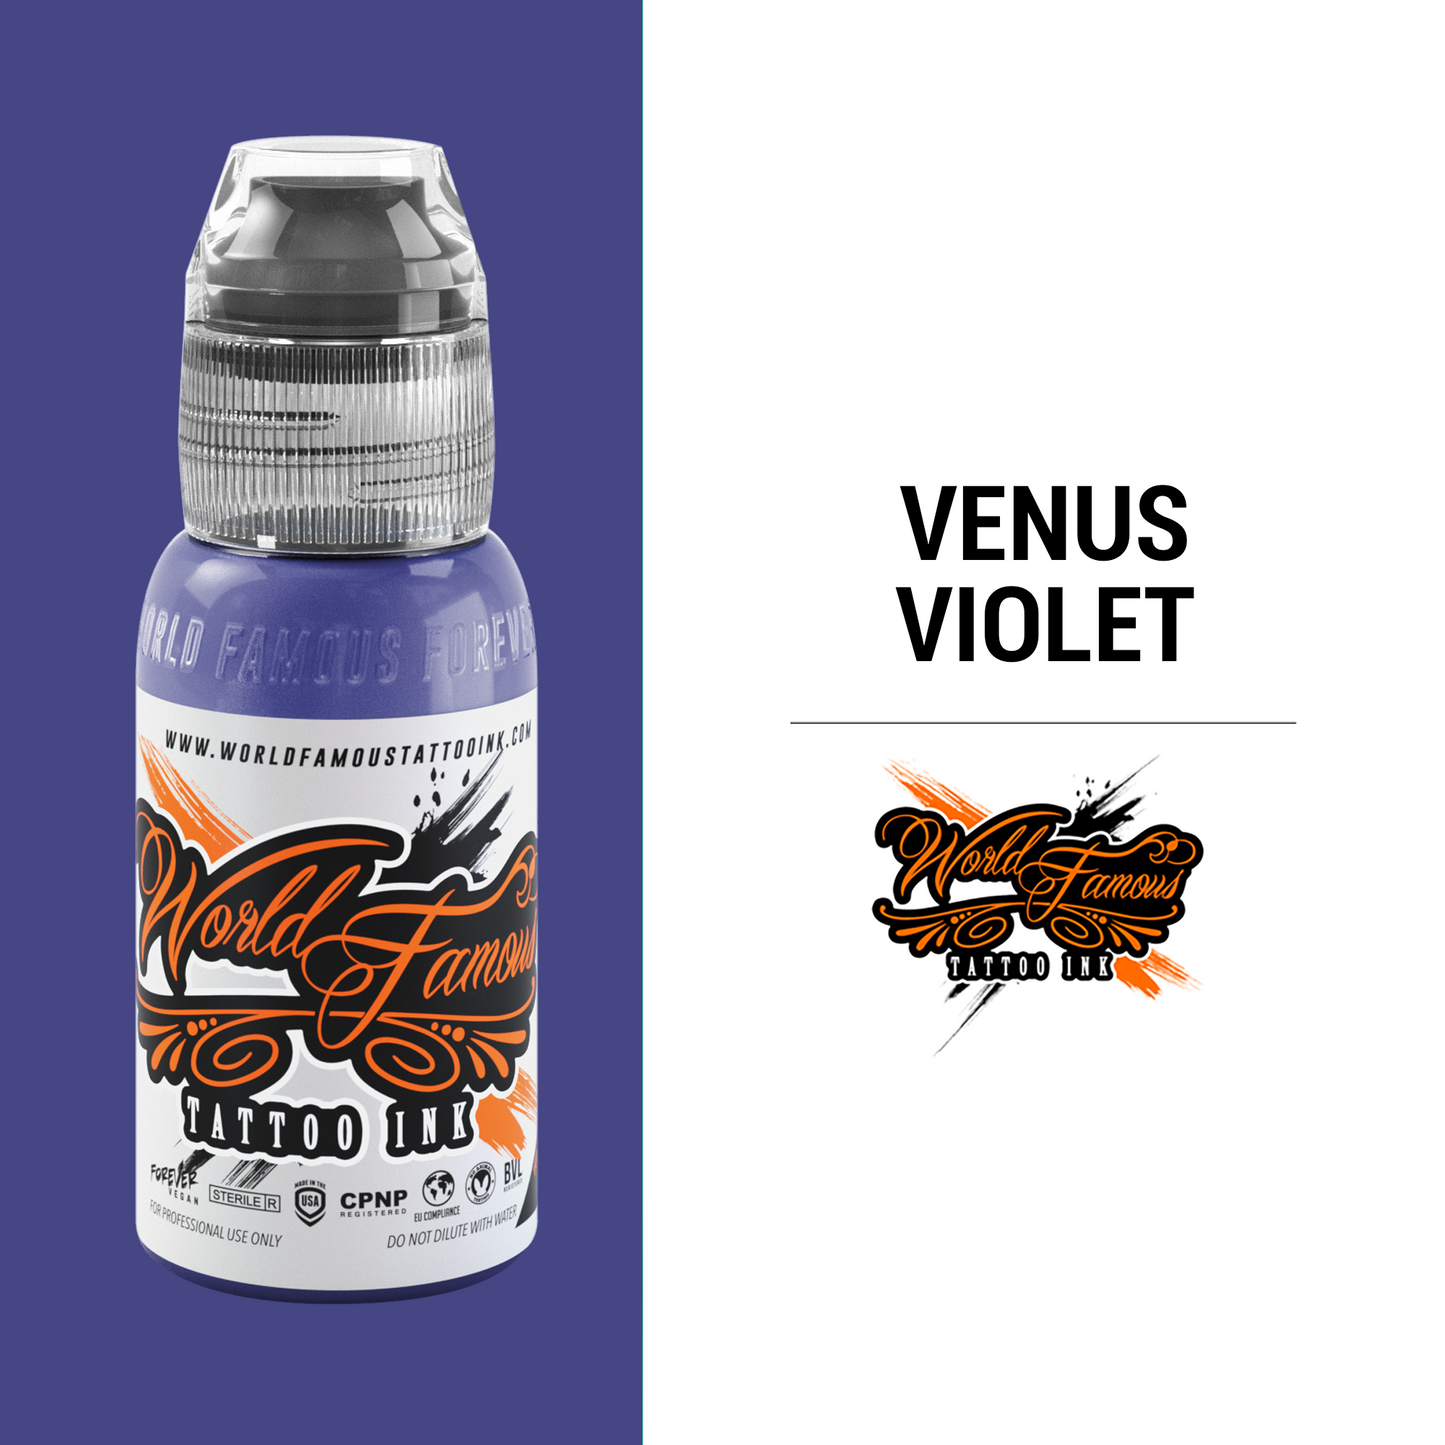 Venus Violet | World Famous Tattoo Ink